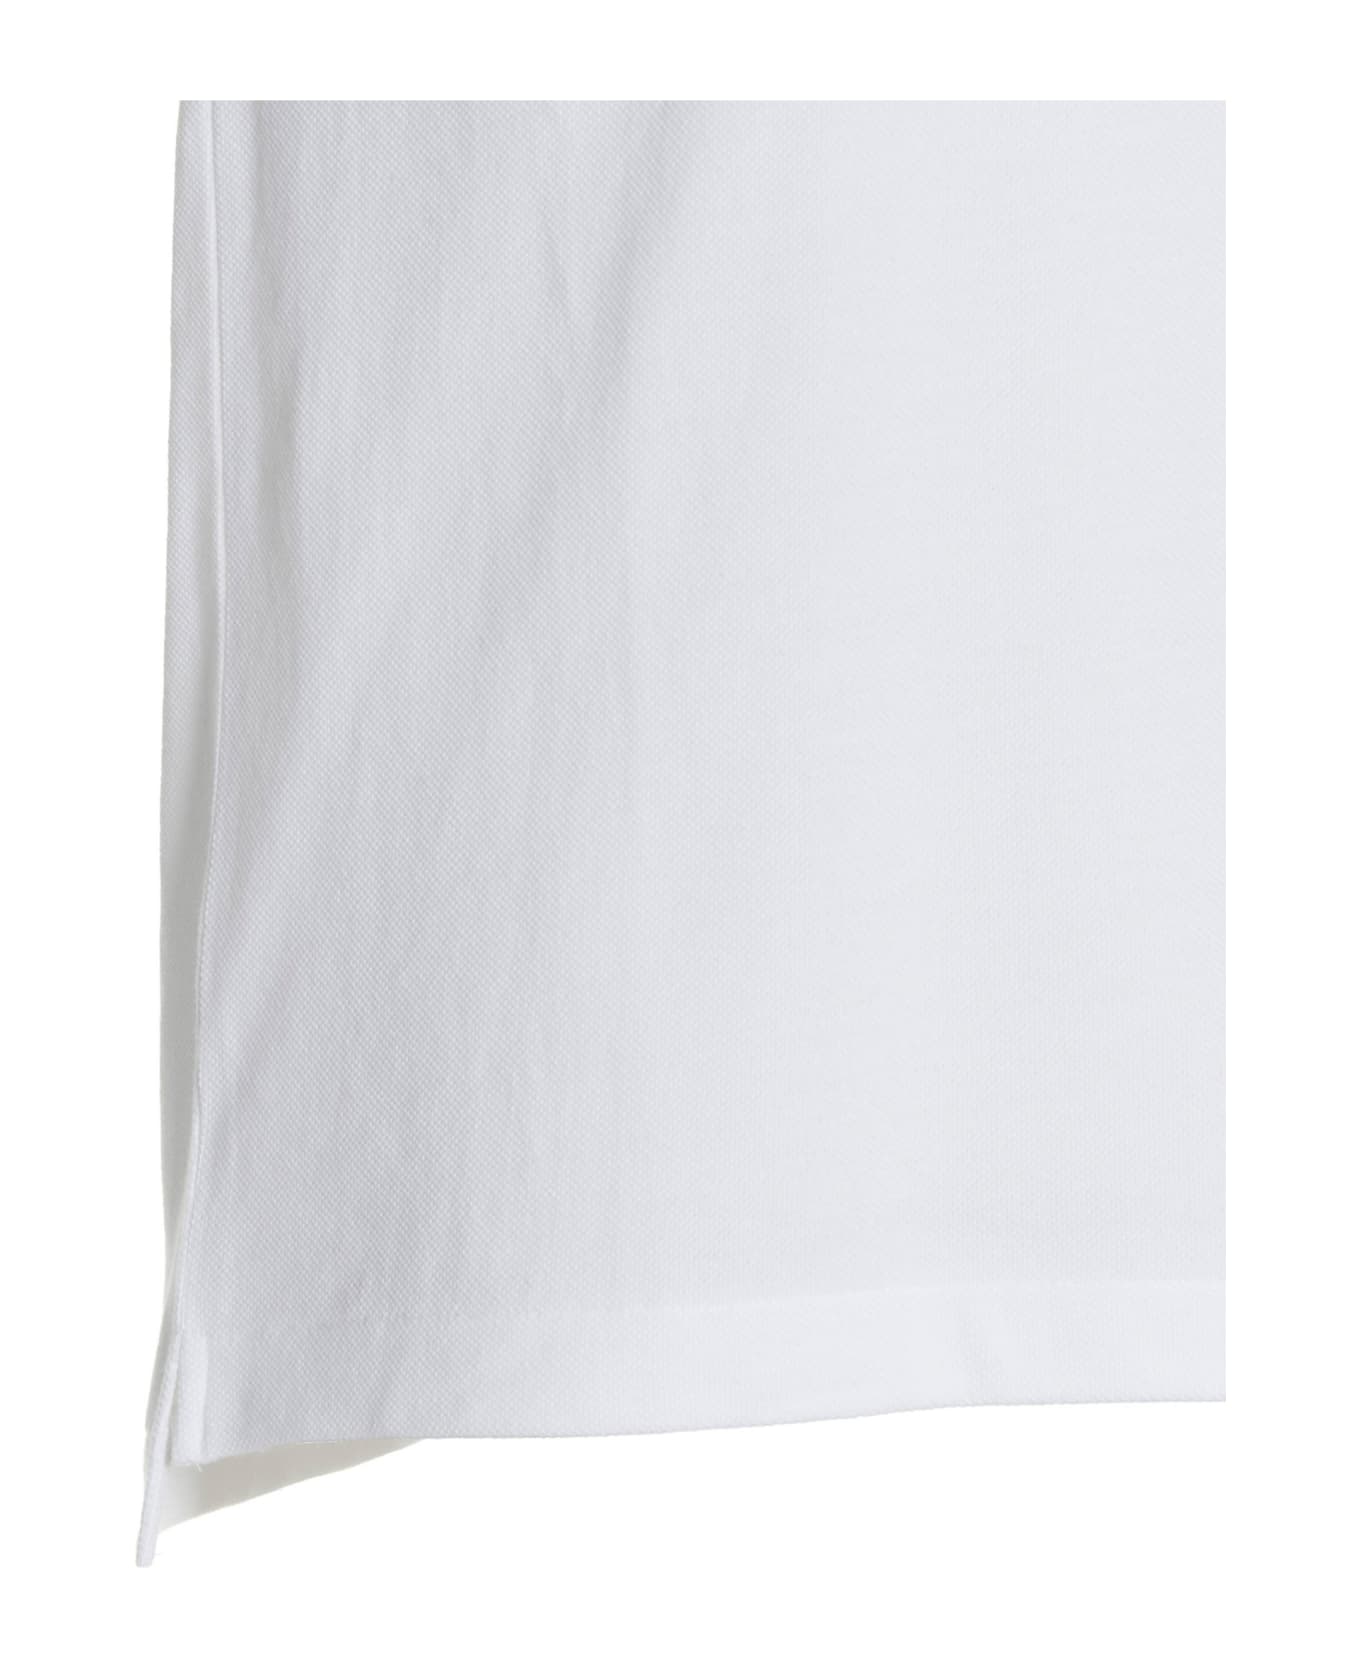 Comme des Garçons Play Logo Patch Polo Shirt - White